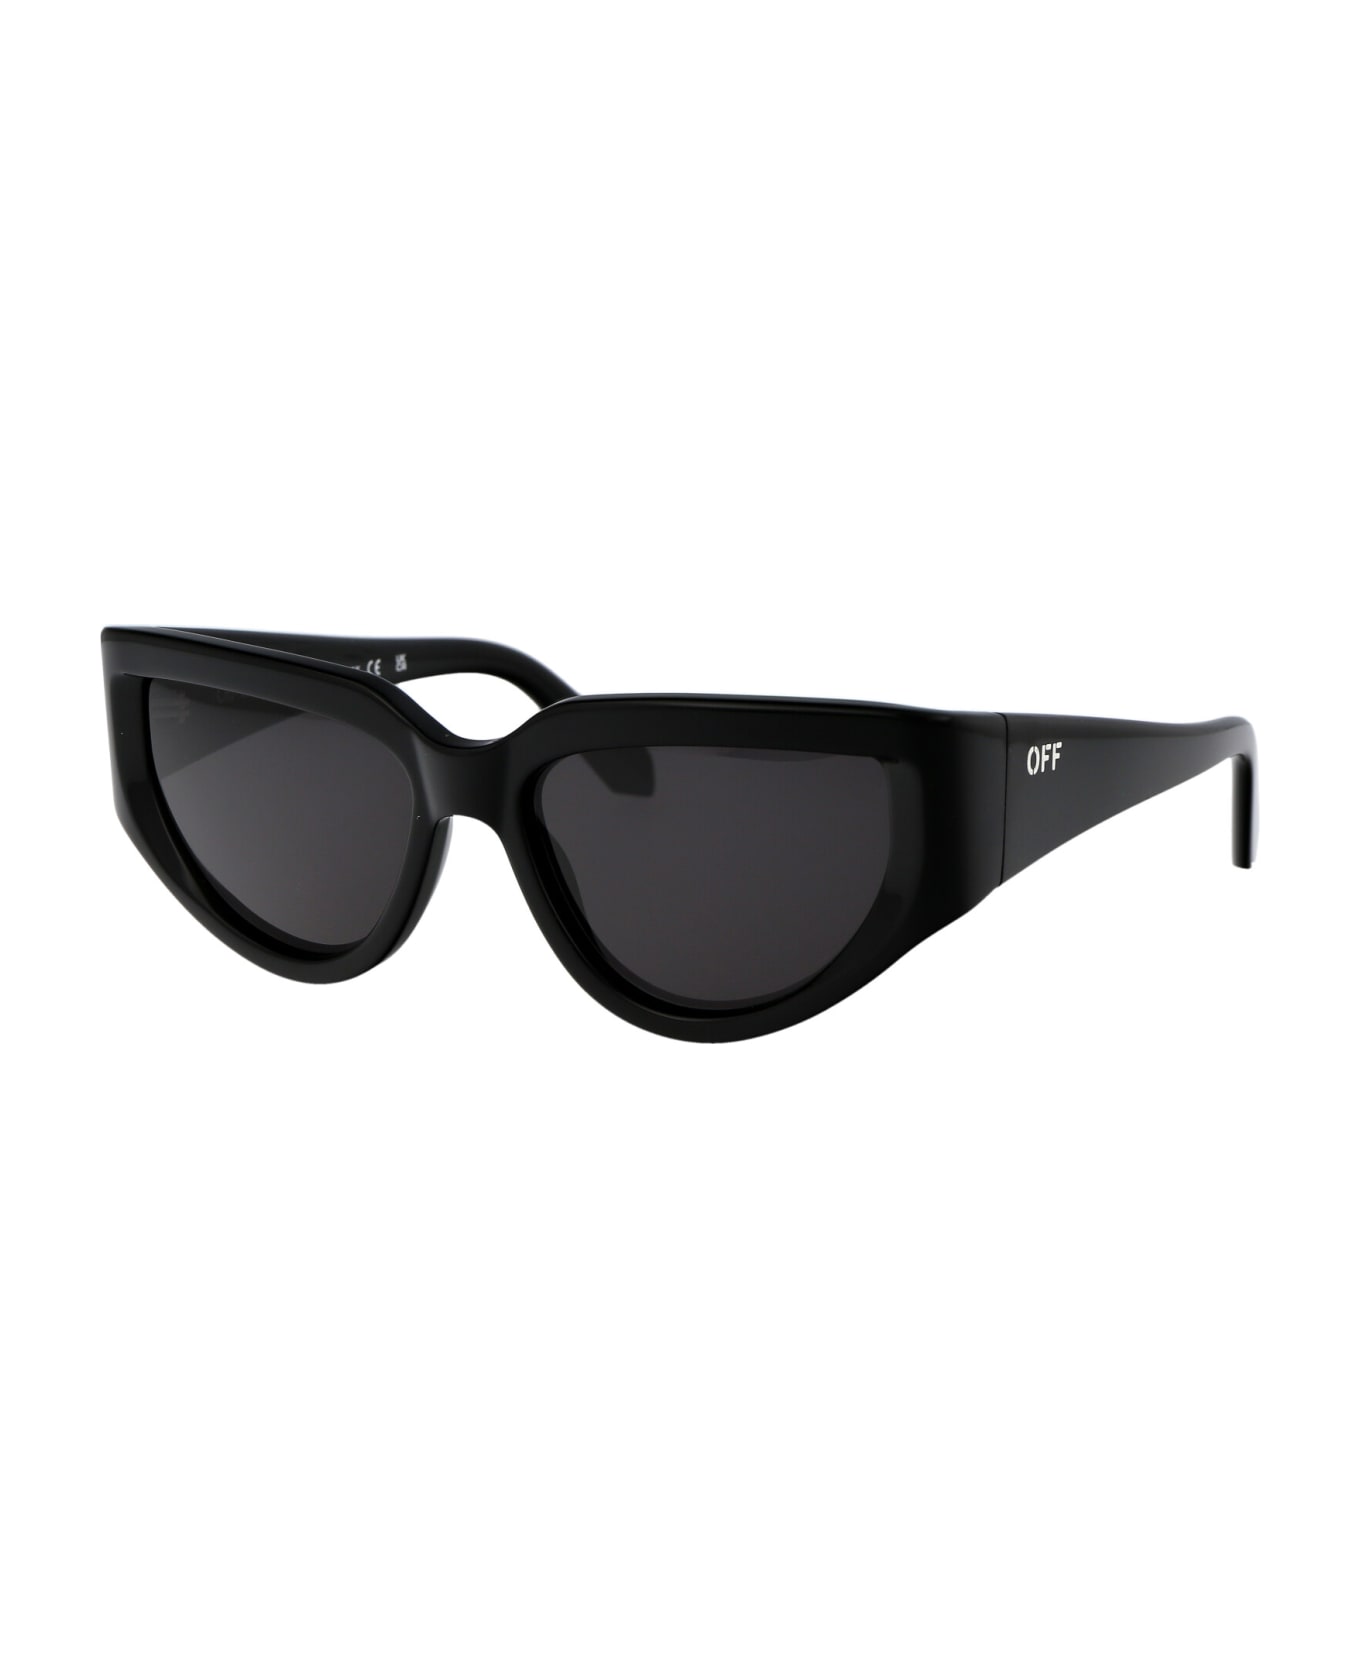 Off-White Seward Sunglasses - 1007 BLACK サングラス